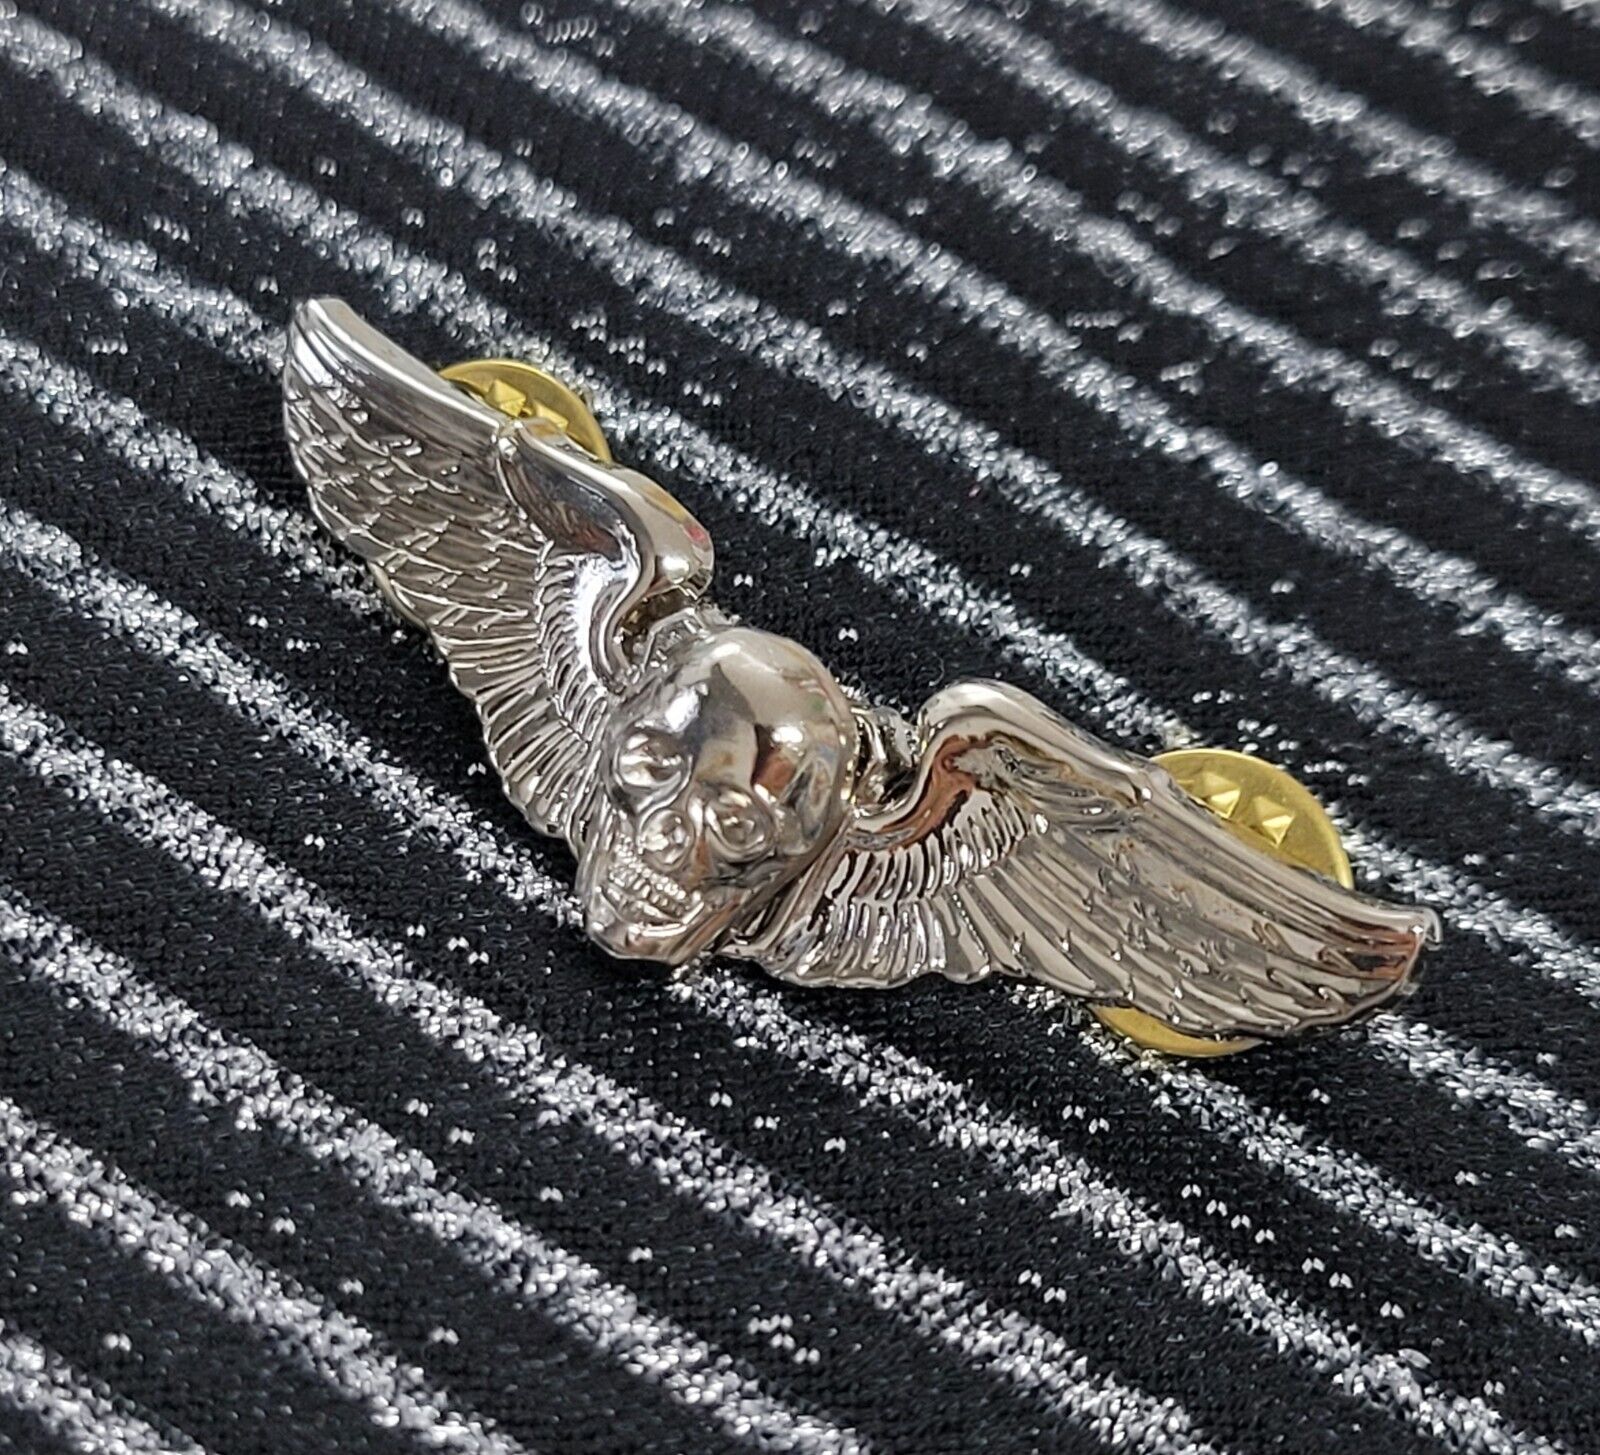 USAF Skull Aviation Pilot Wing US Air Force Badge Pin Aviator Insignia Silver